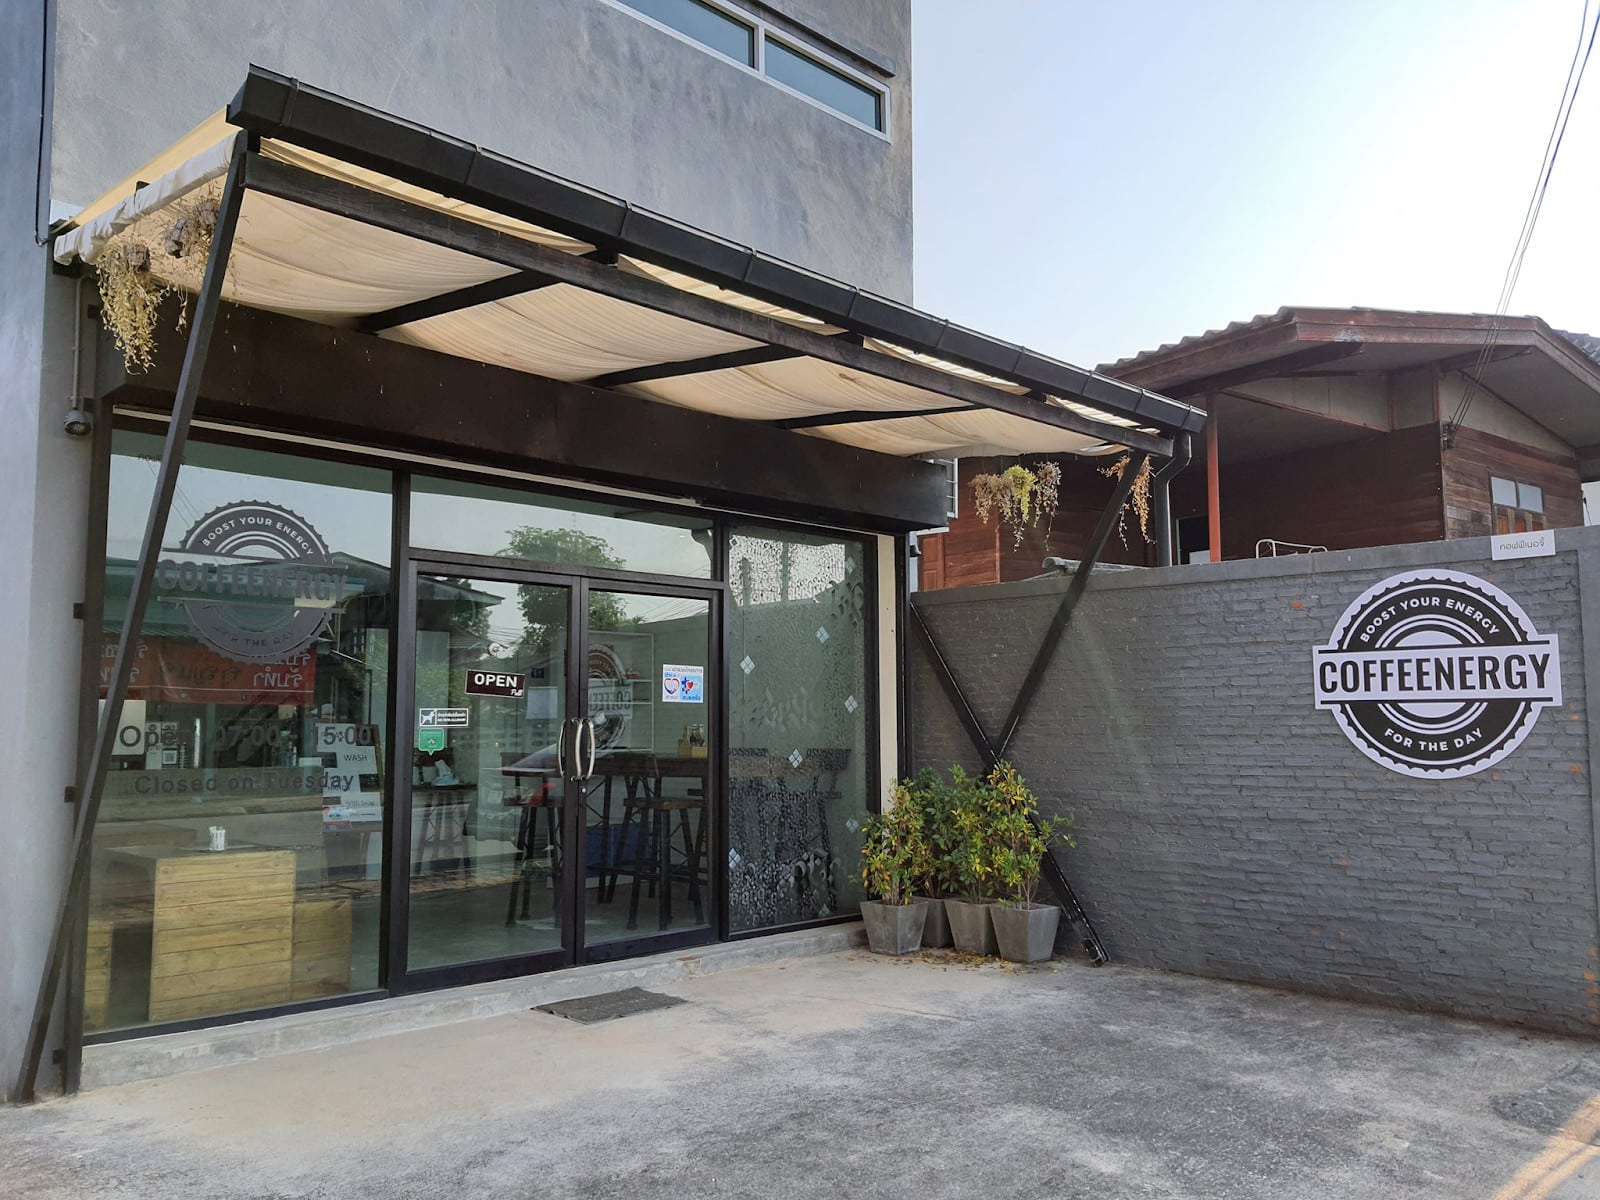 The Coffeenergy Cafe in Chiang Rai